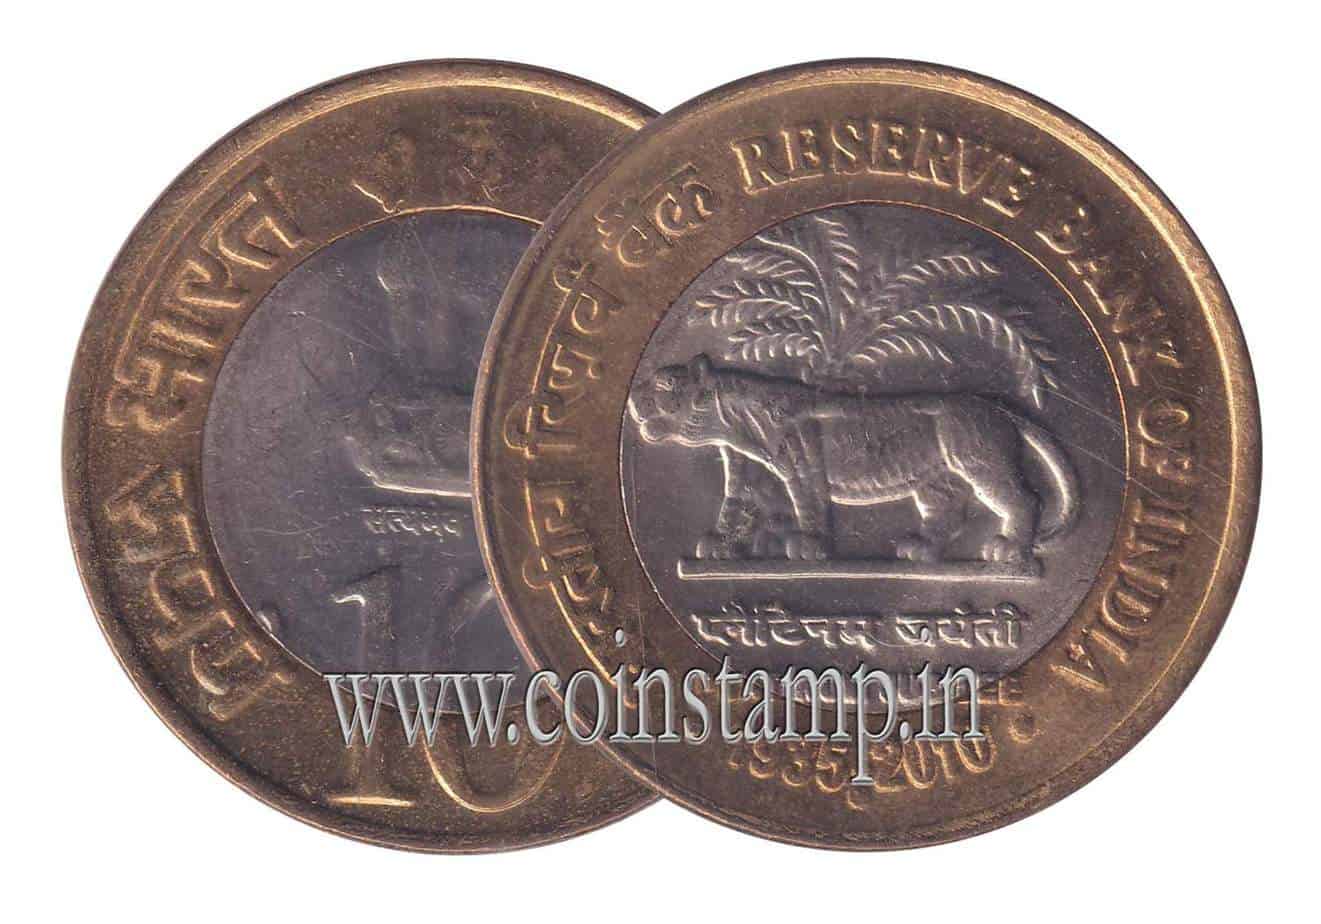 Indian rupee coin - Wikipedia